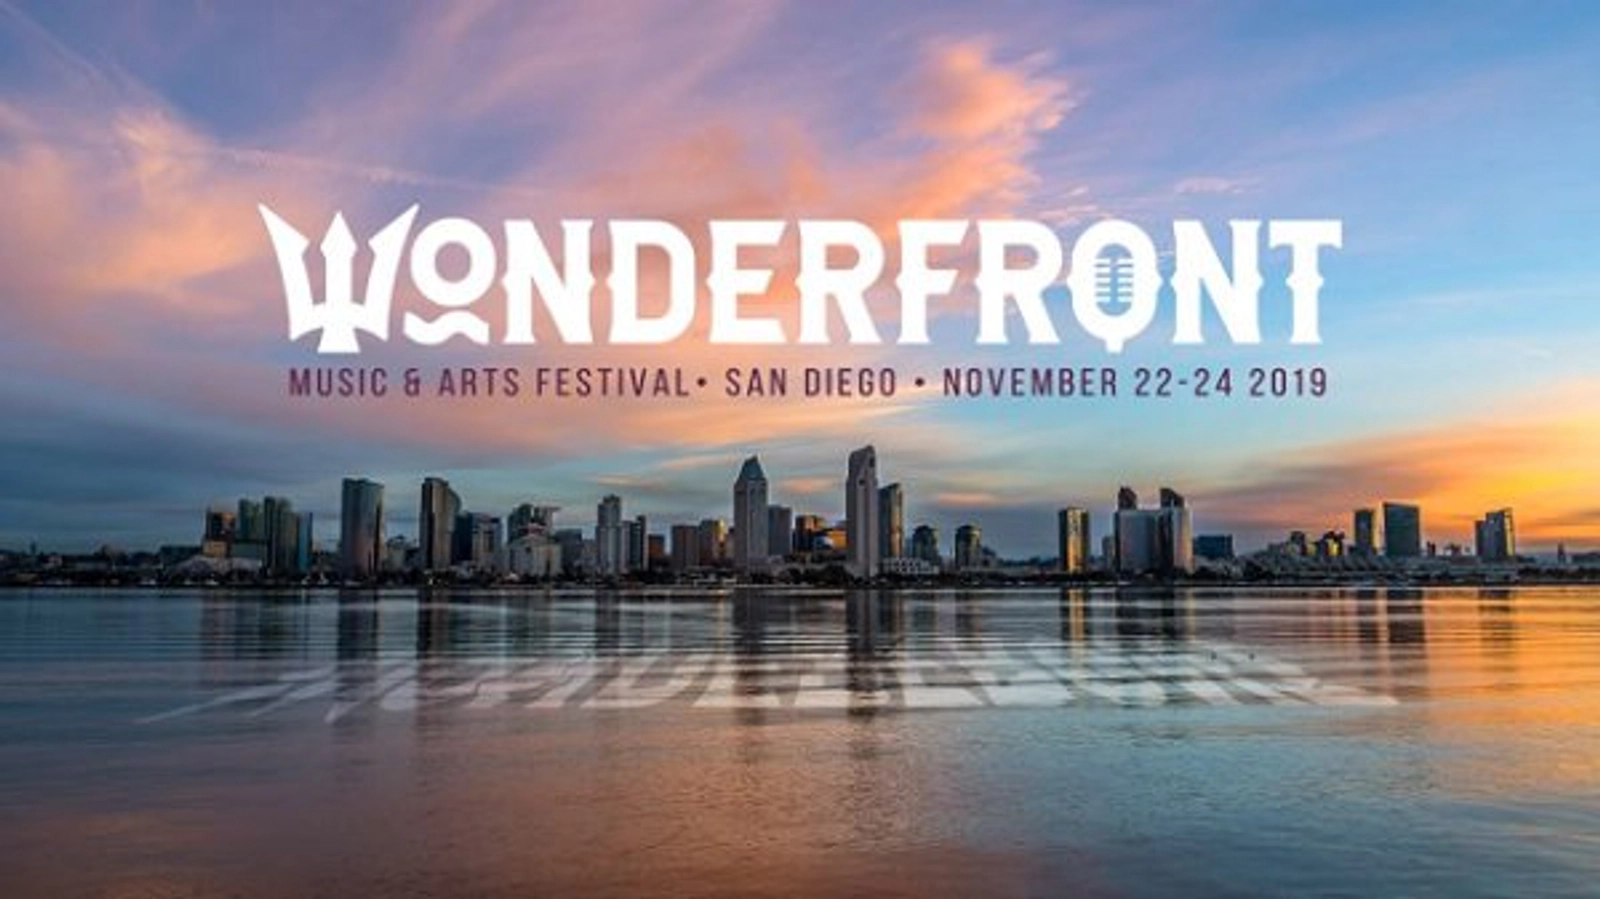 Win Friday Passes to The Wonderfront Festival - Thumbnail Image